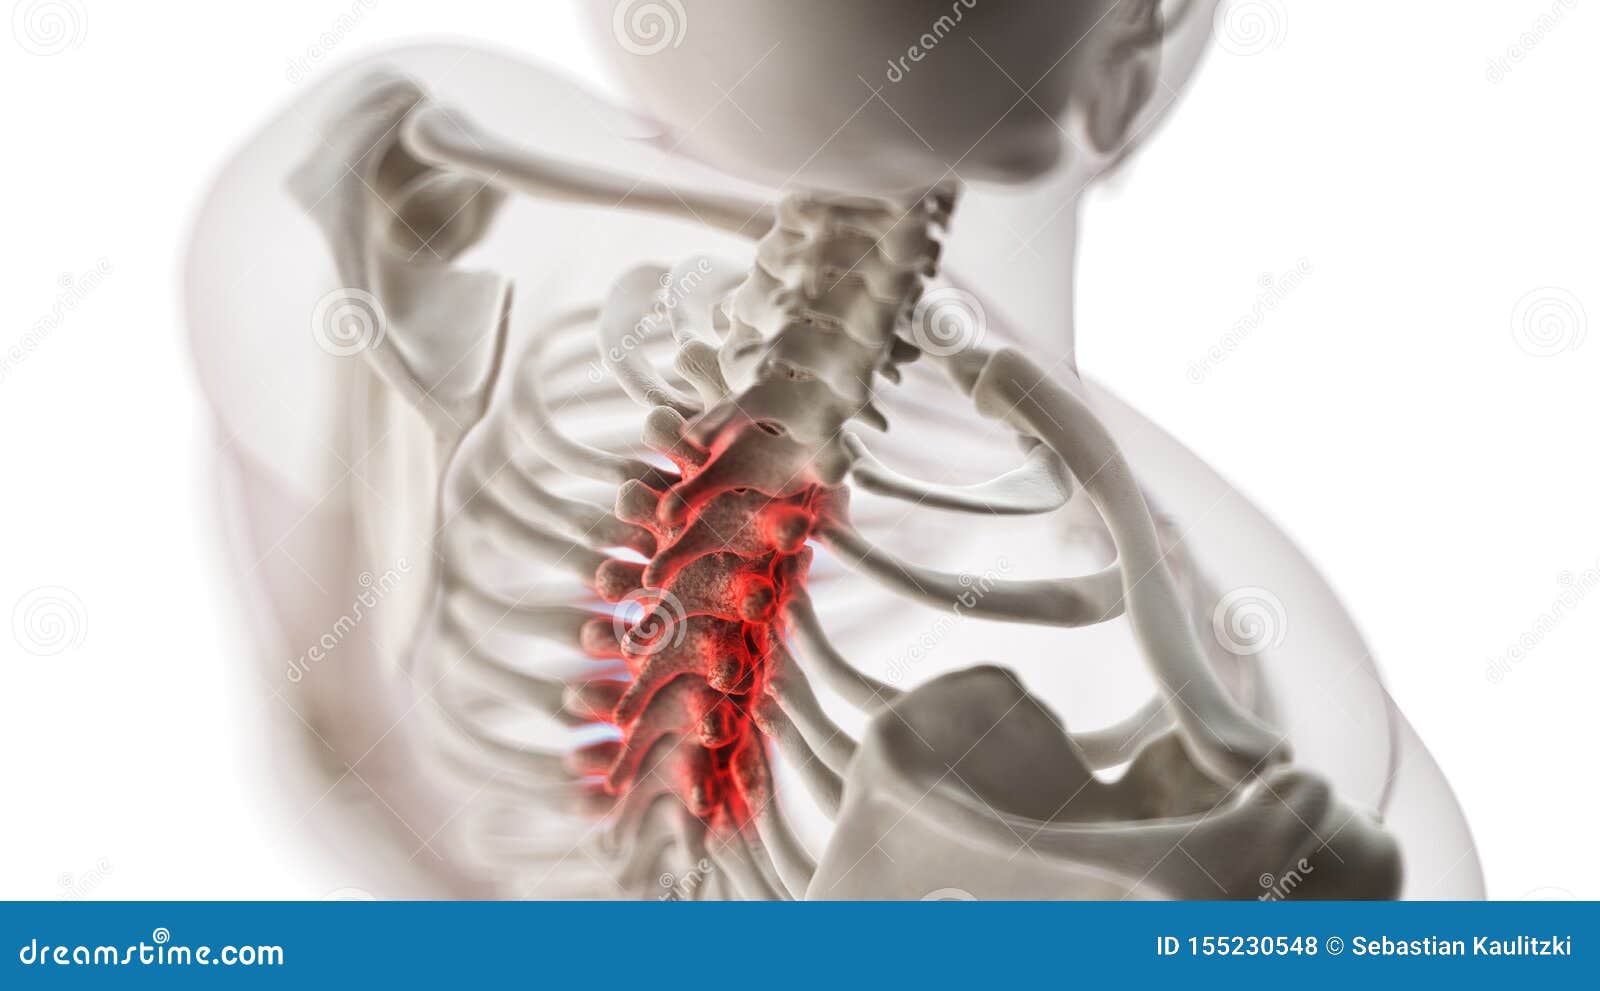 an arthritic thoracic spine